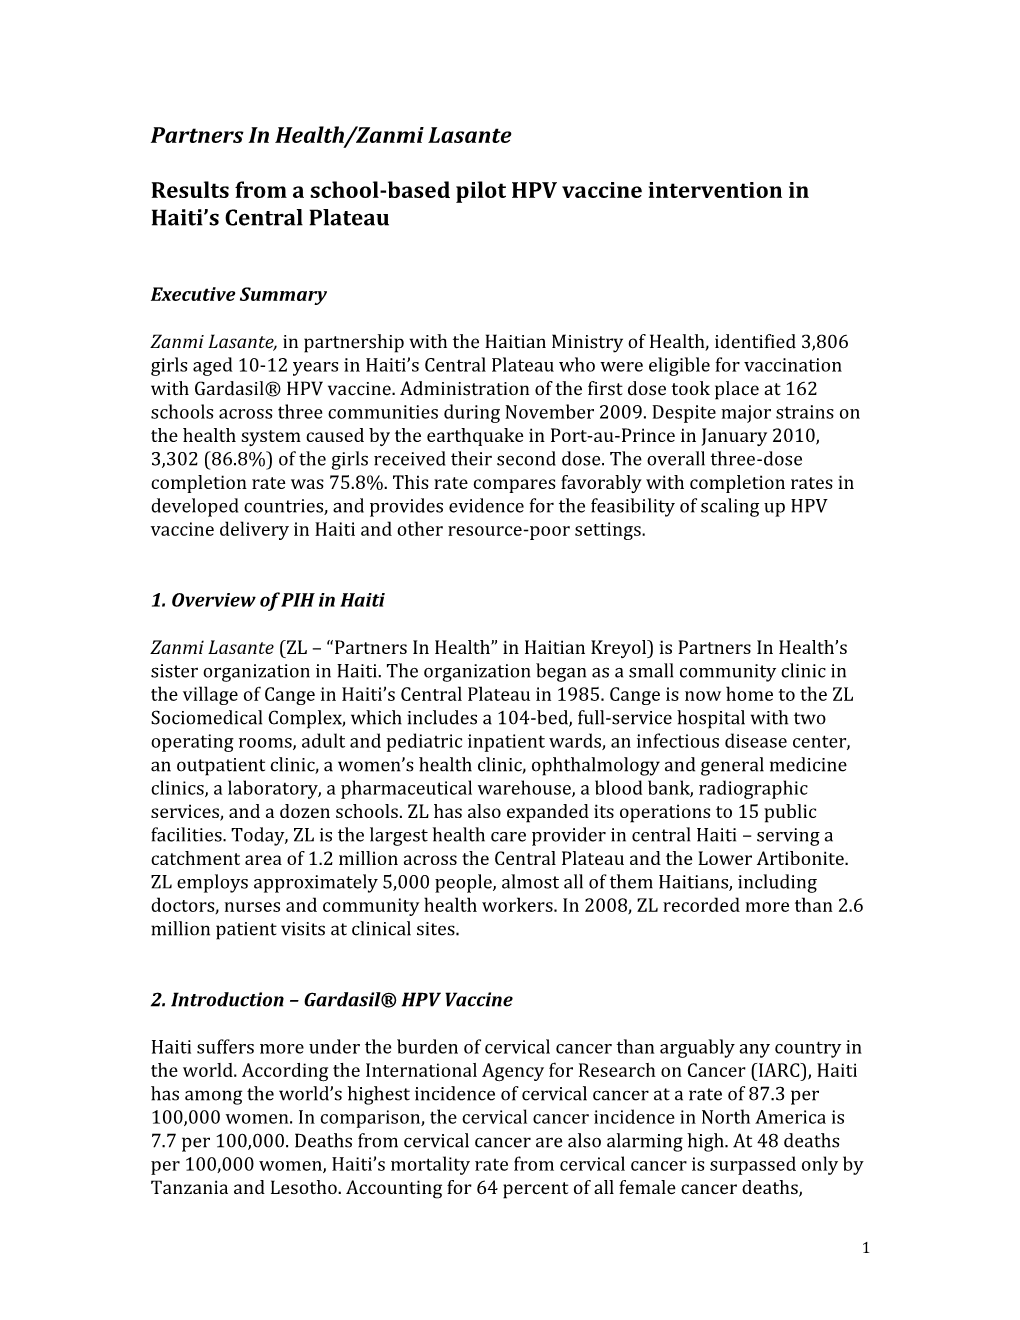 HPV Vaccine in Haiti Summary, Nov 2011